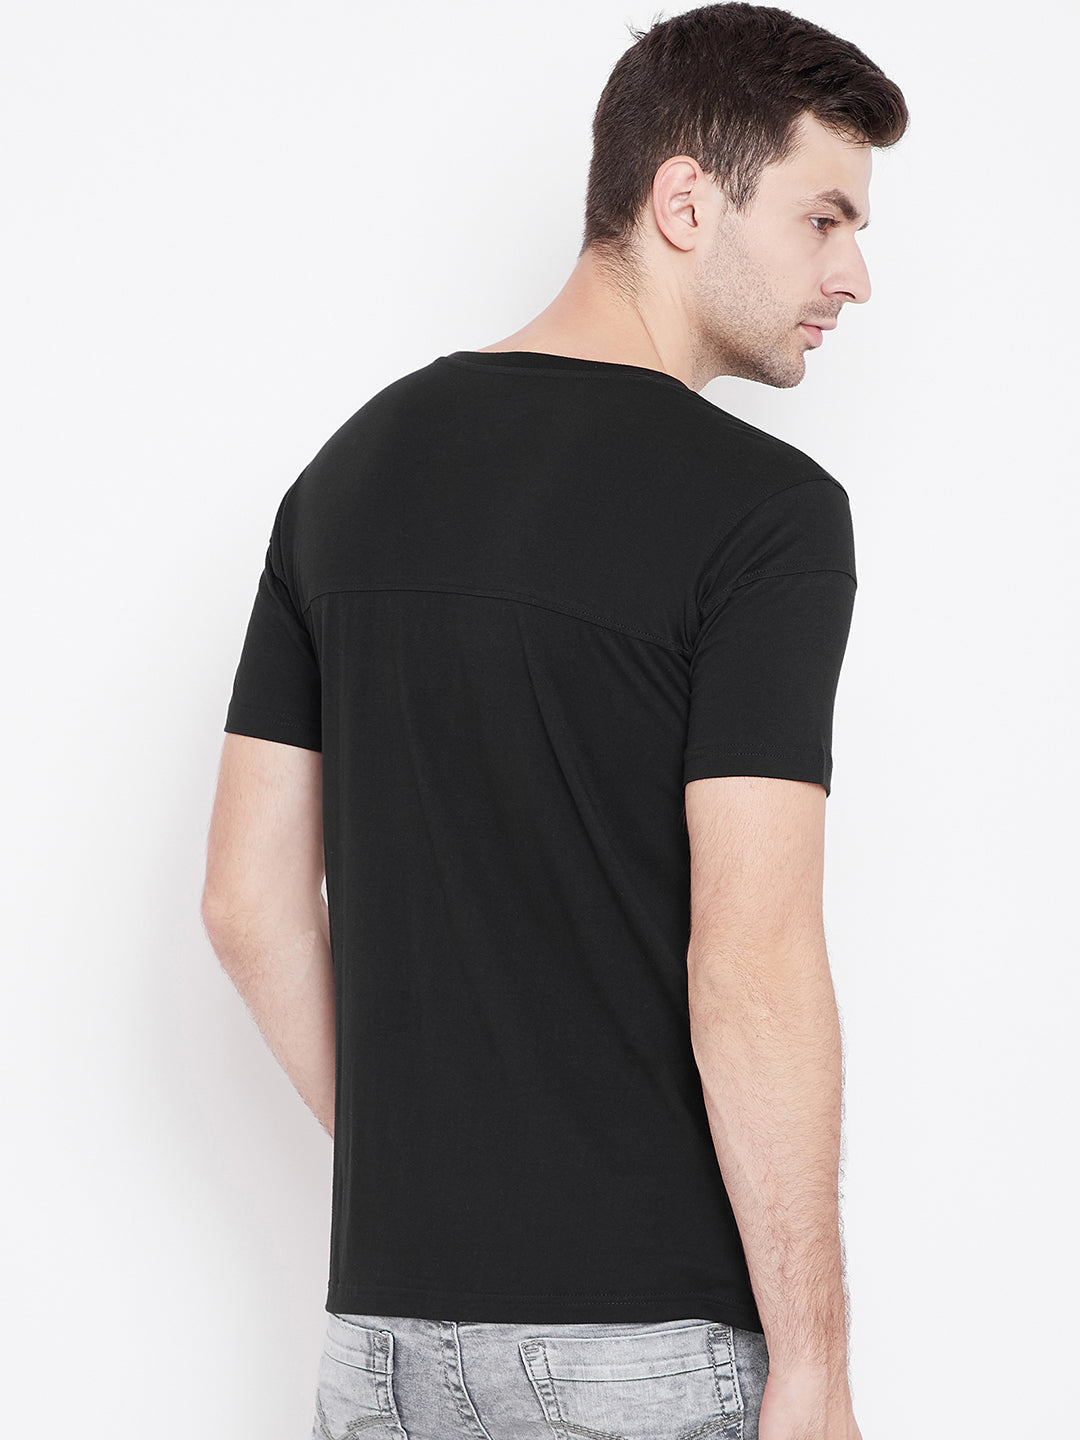 PUNK-ZIPPER Black T-Shirt